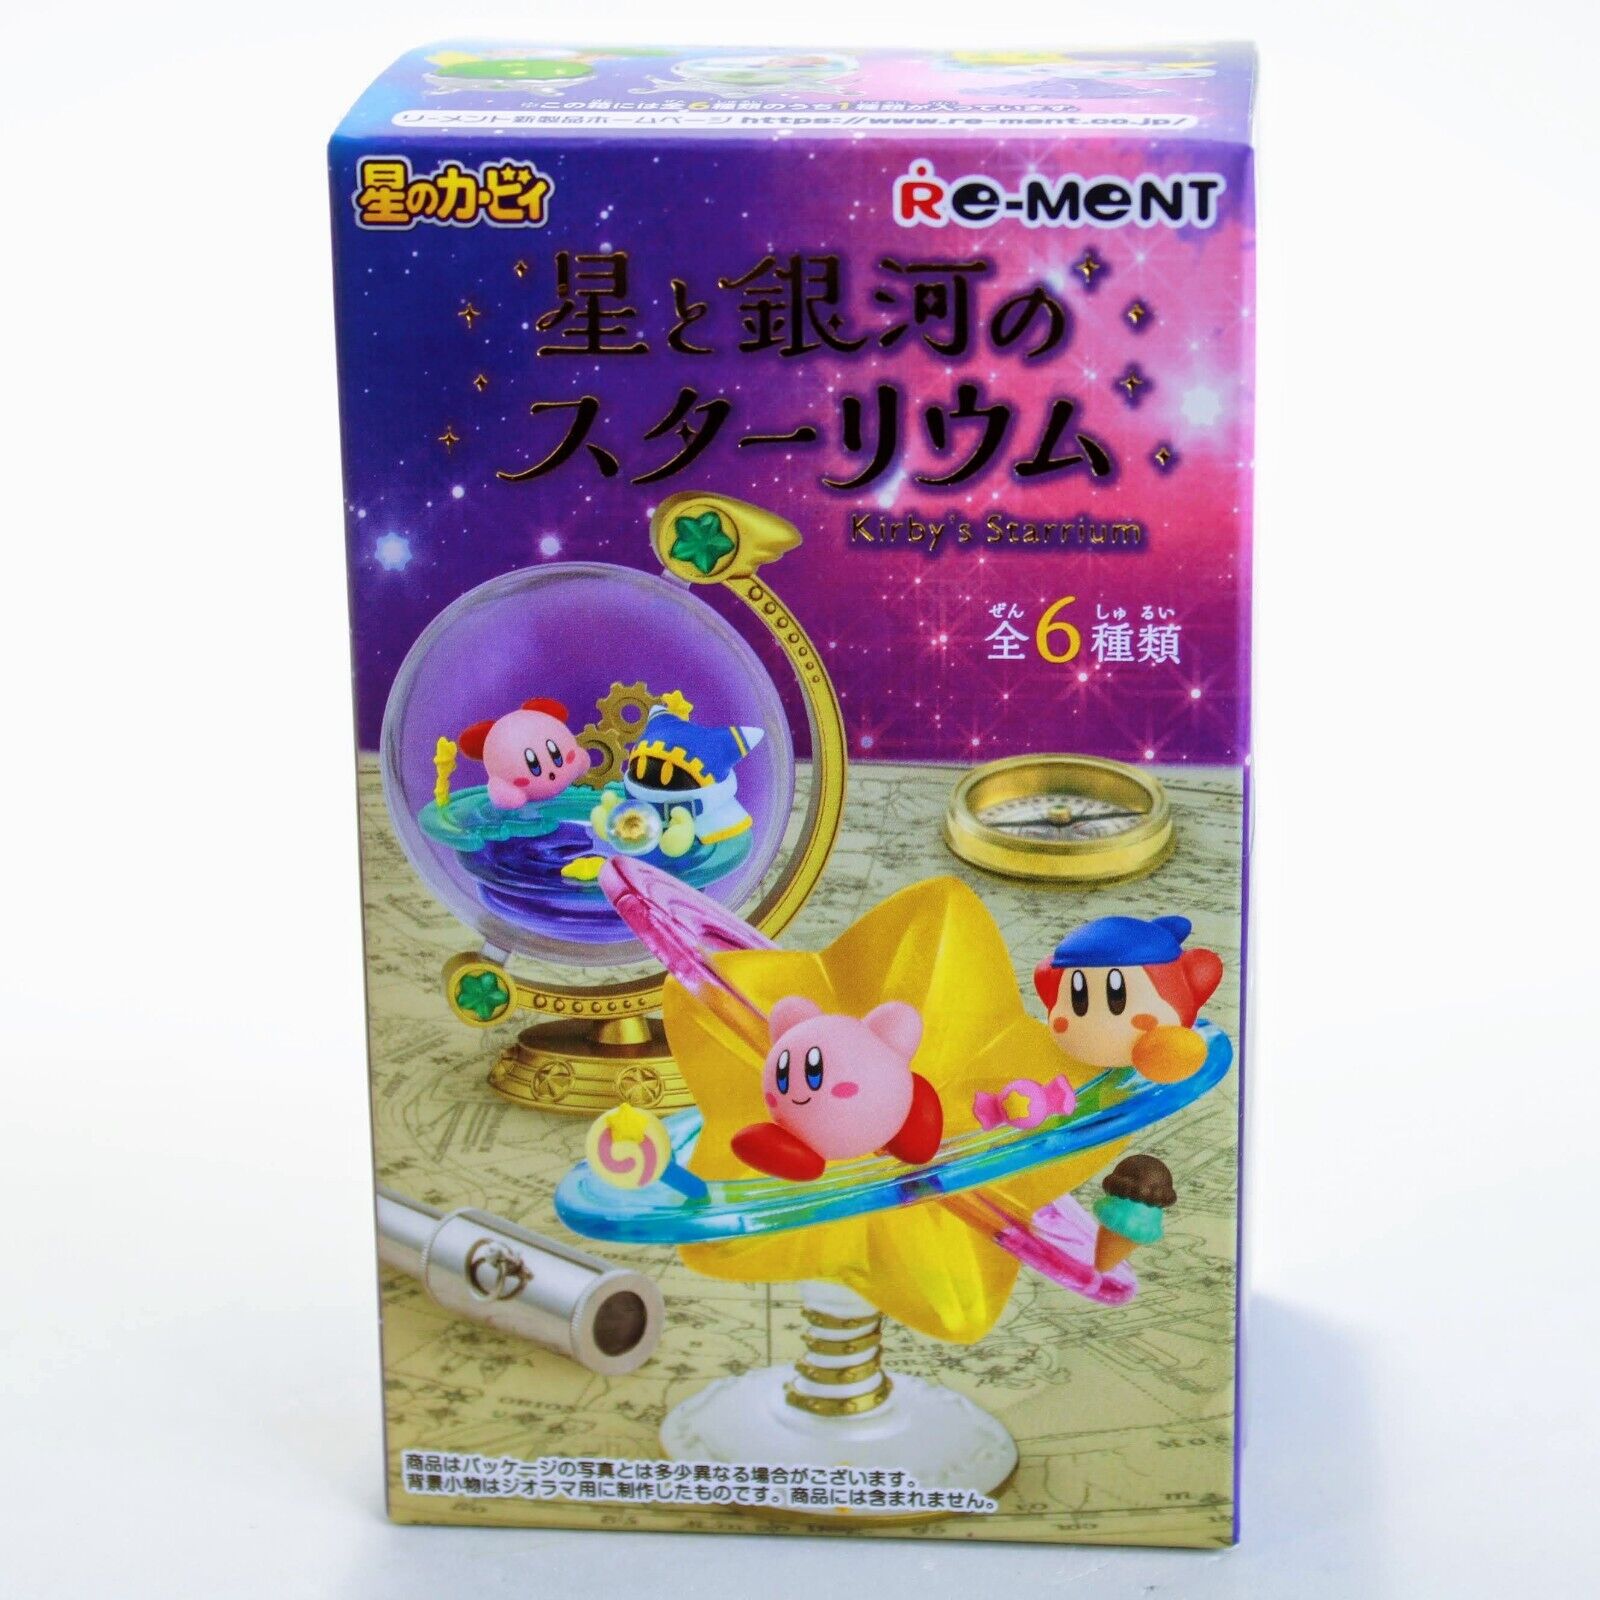 Kirby's Dream Land Kirby Friends 2 Box of 12 Random Vinyl Figures